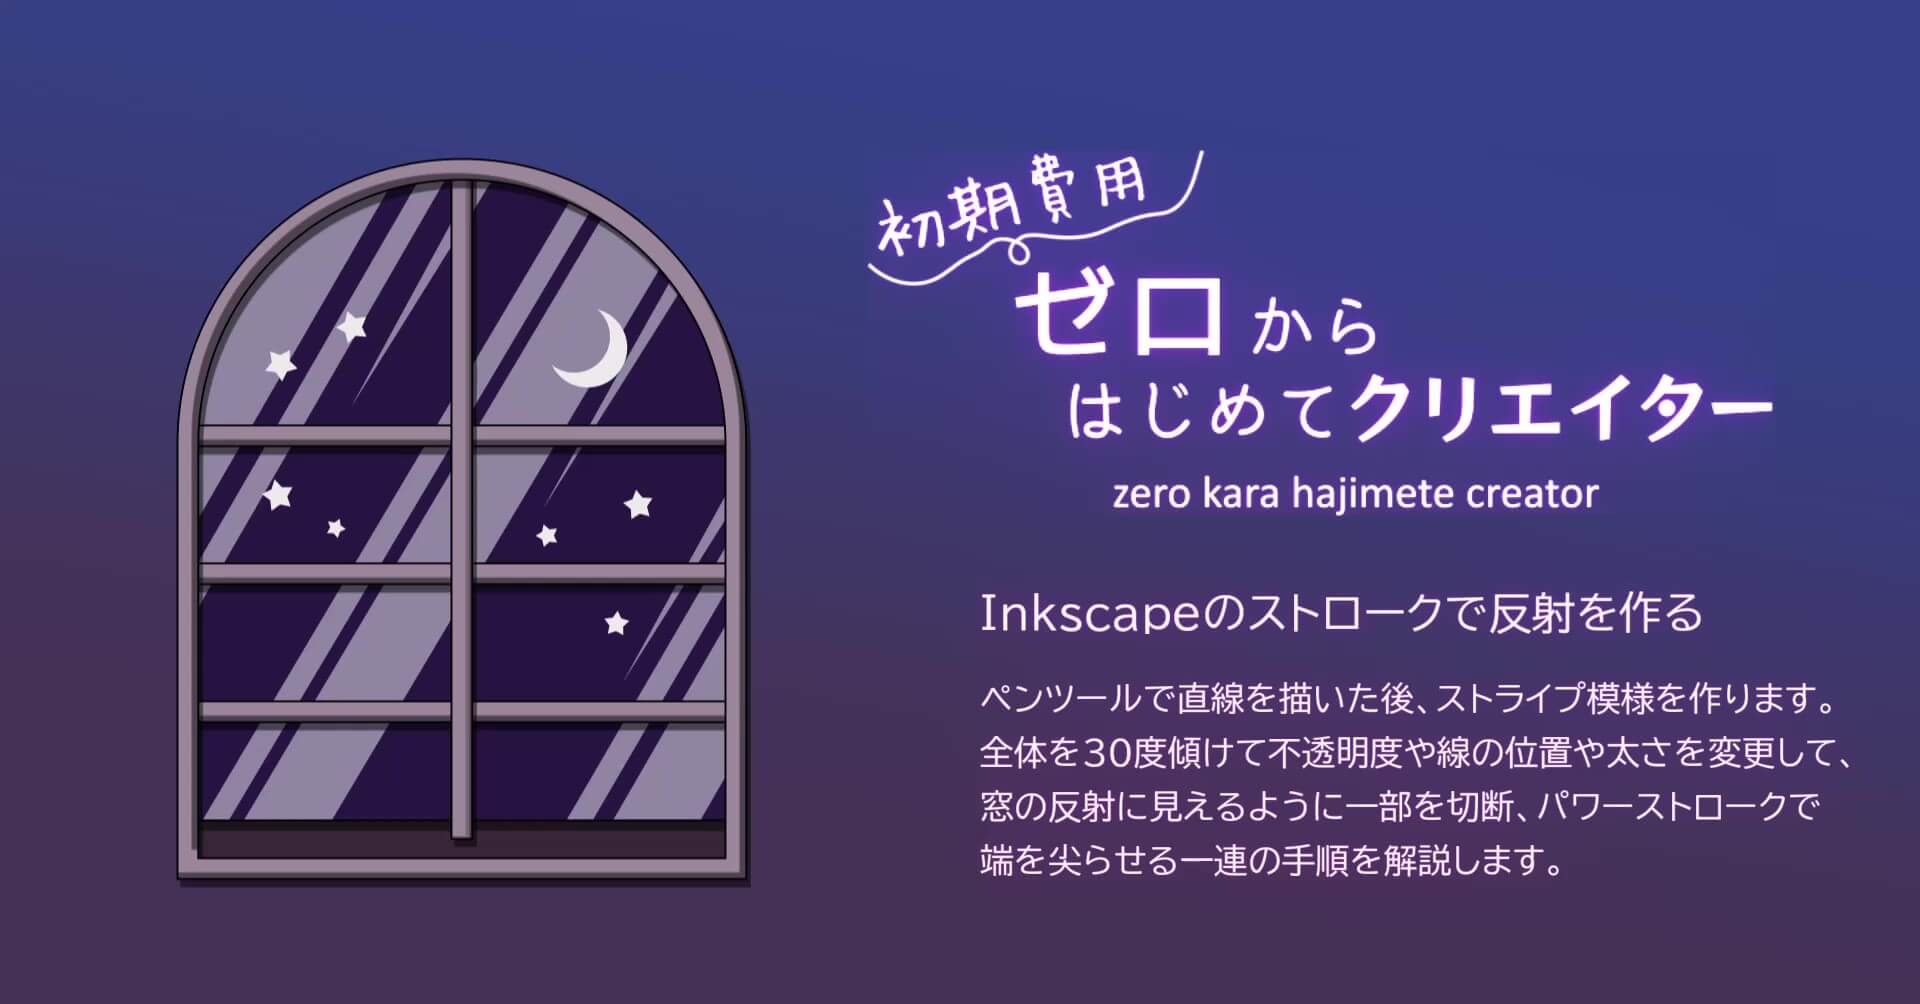 Inkscapeで夜空と窓を描く